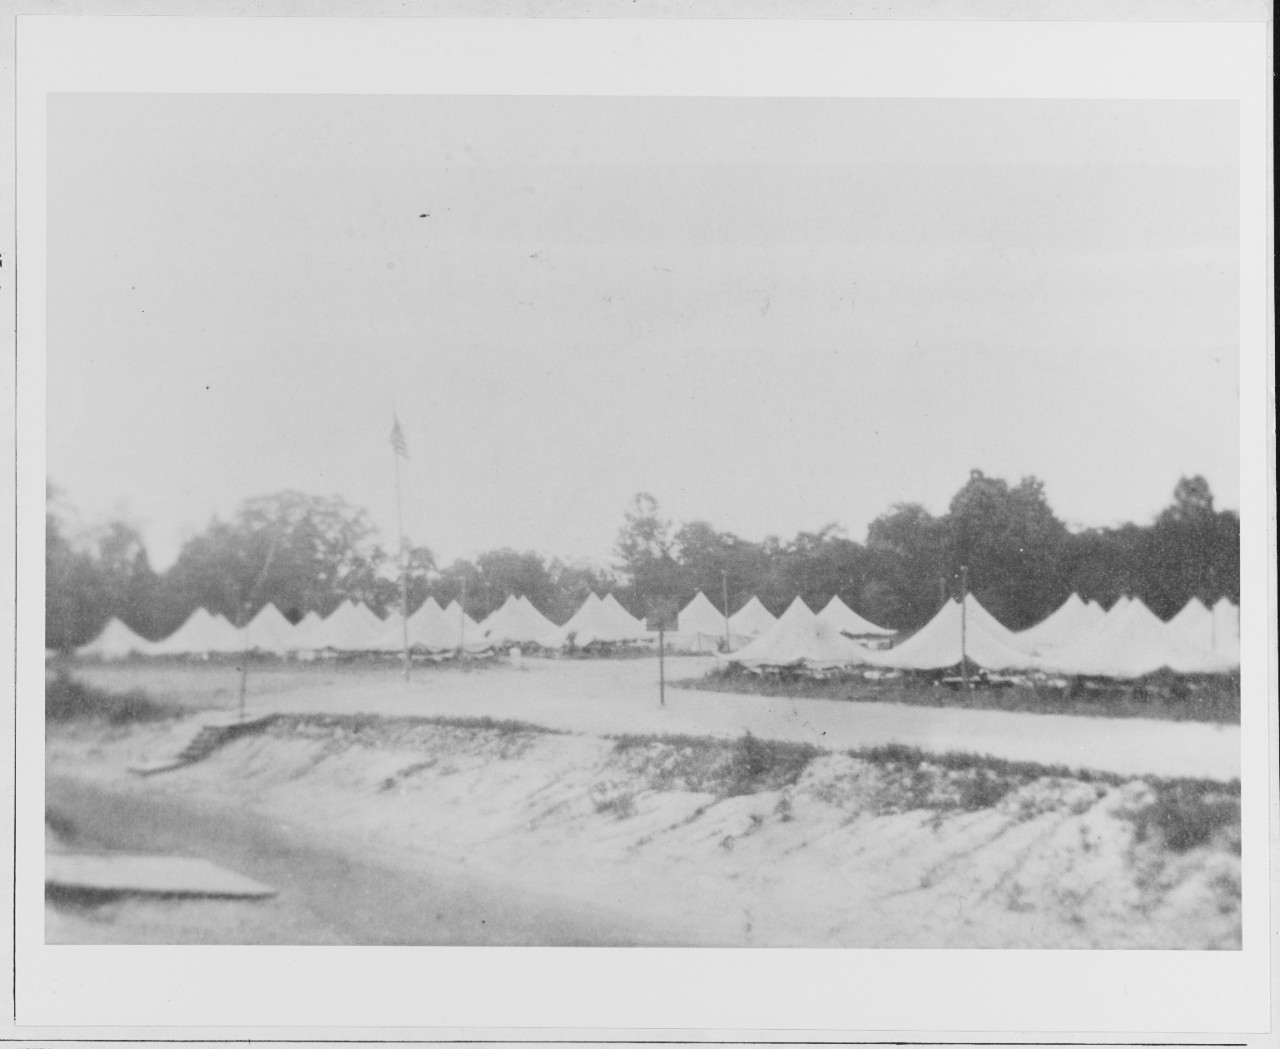 Camp Columbia, Washington, D.C.